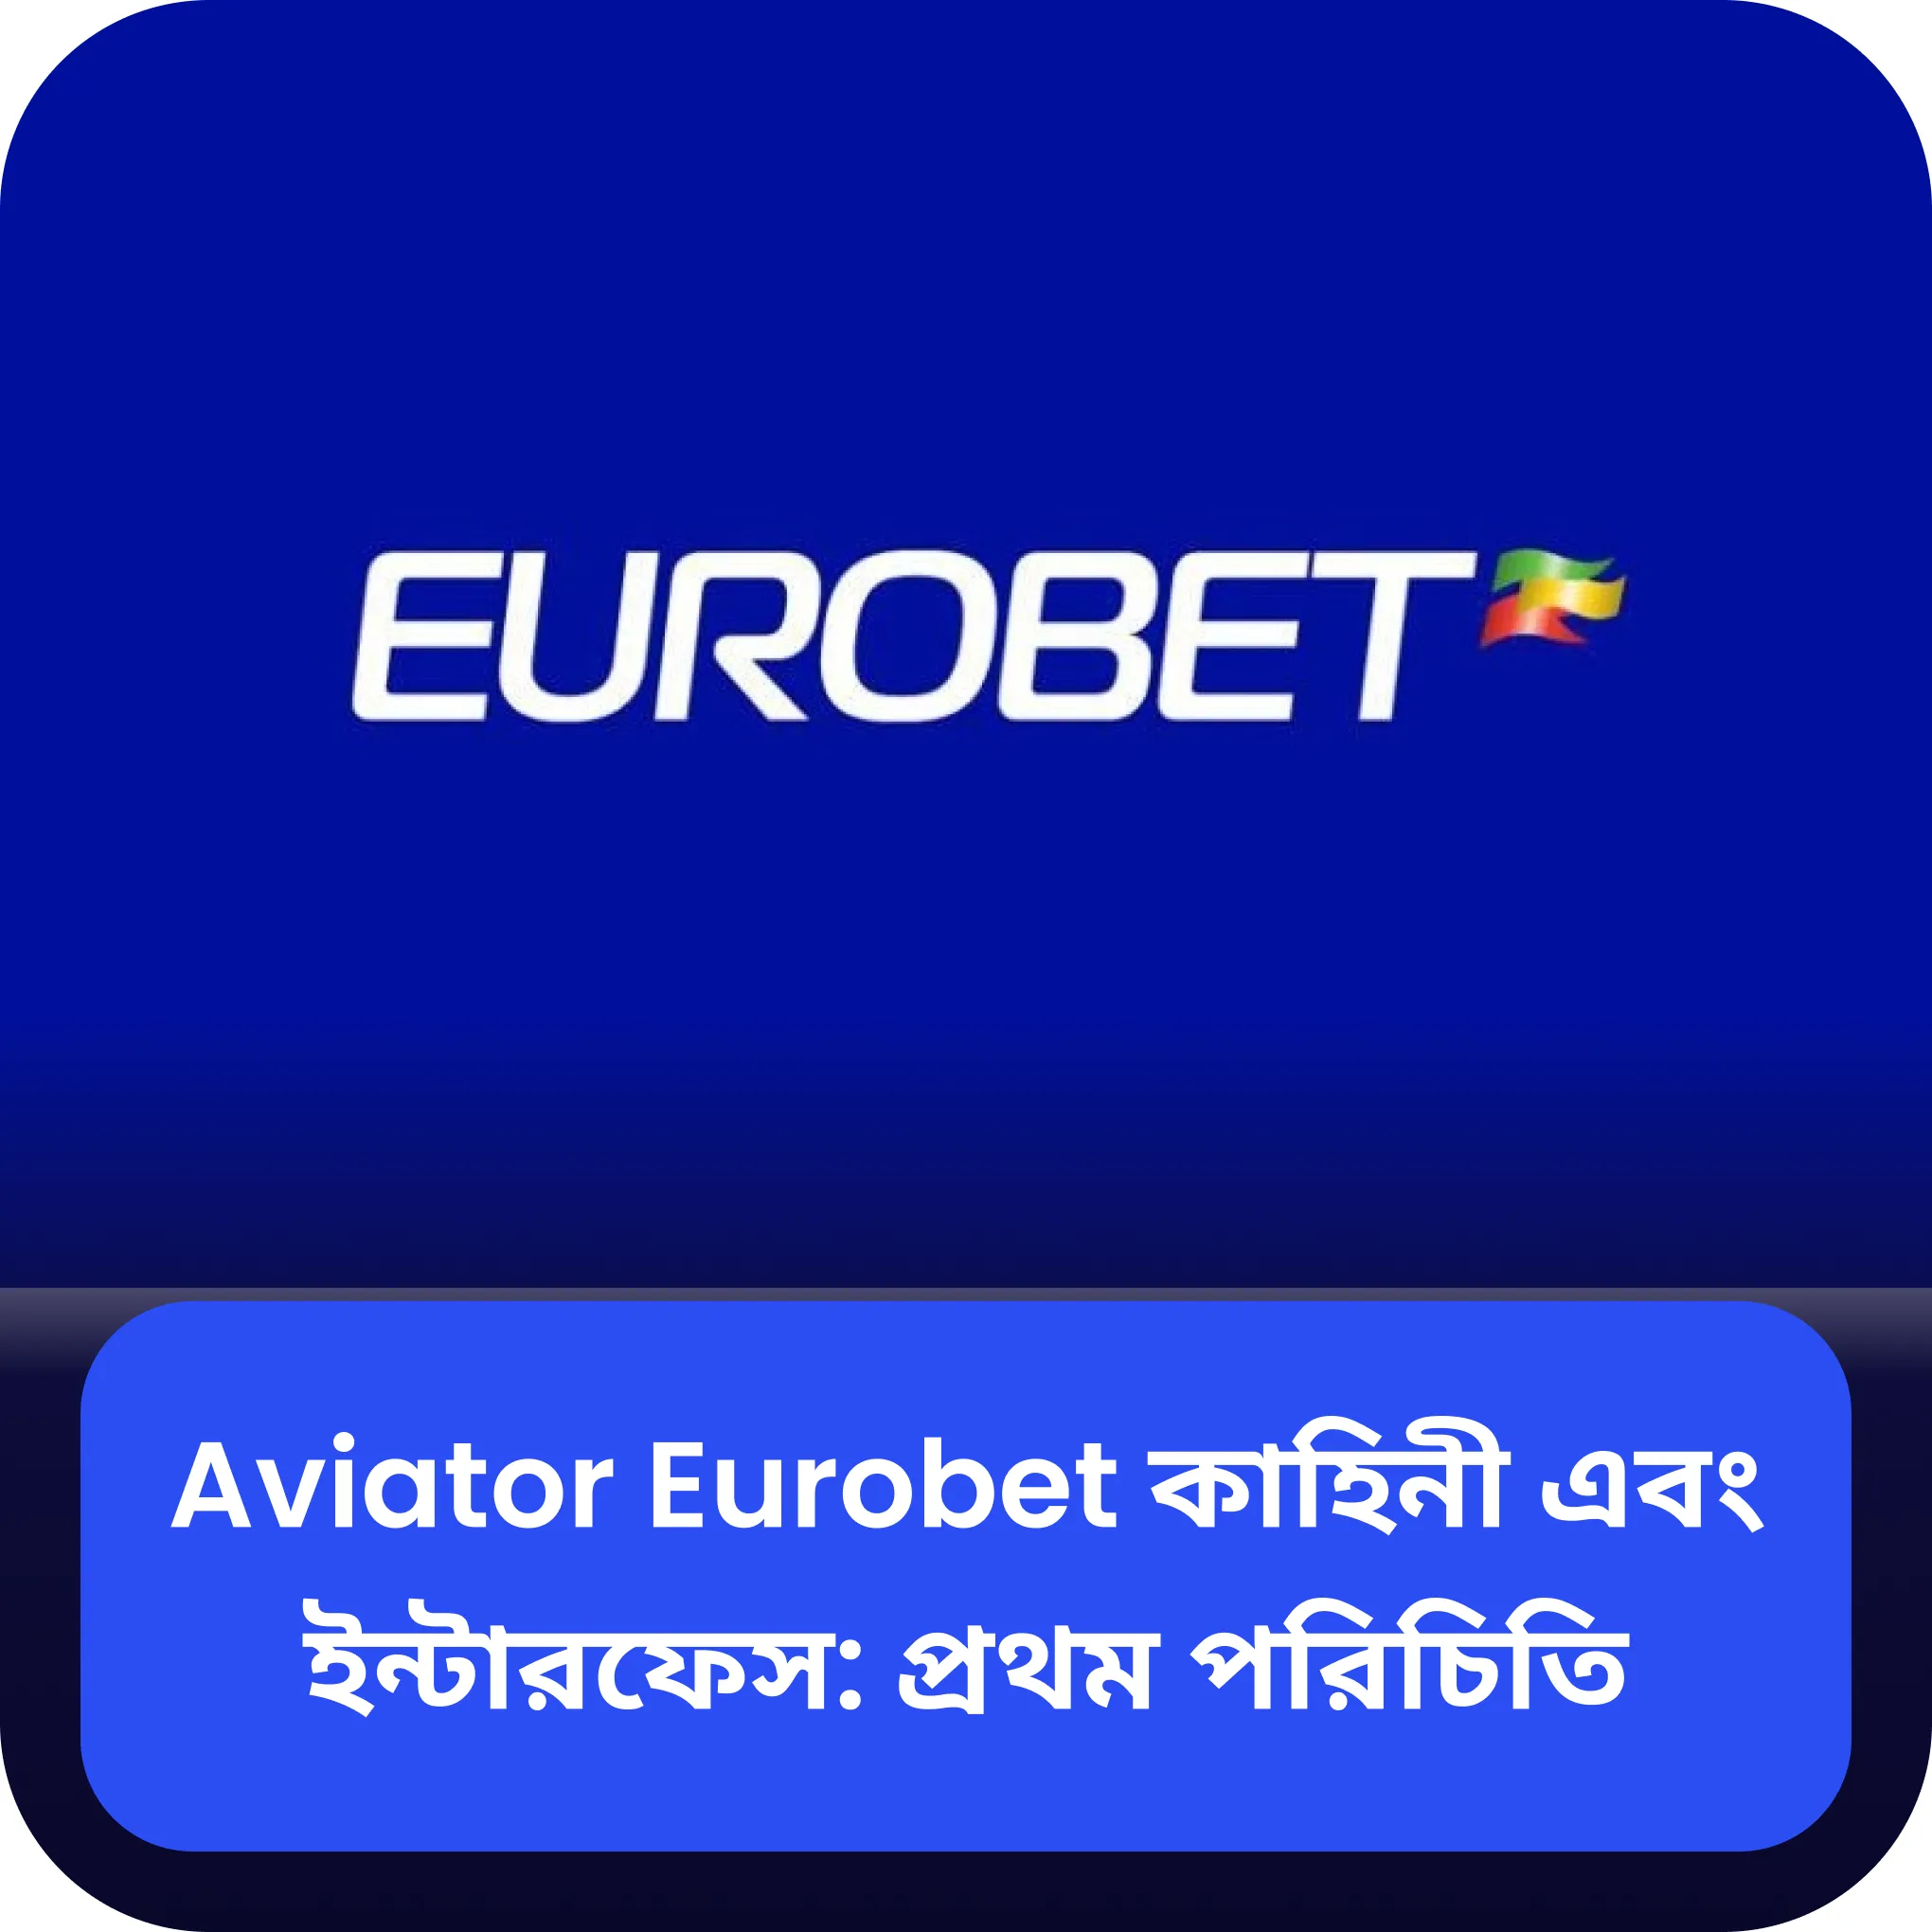 eurobet aviator কাহিনী